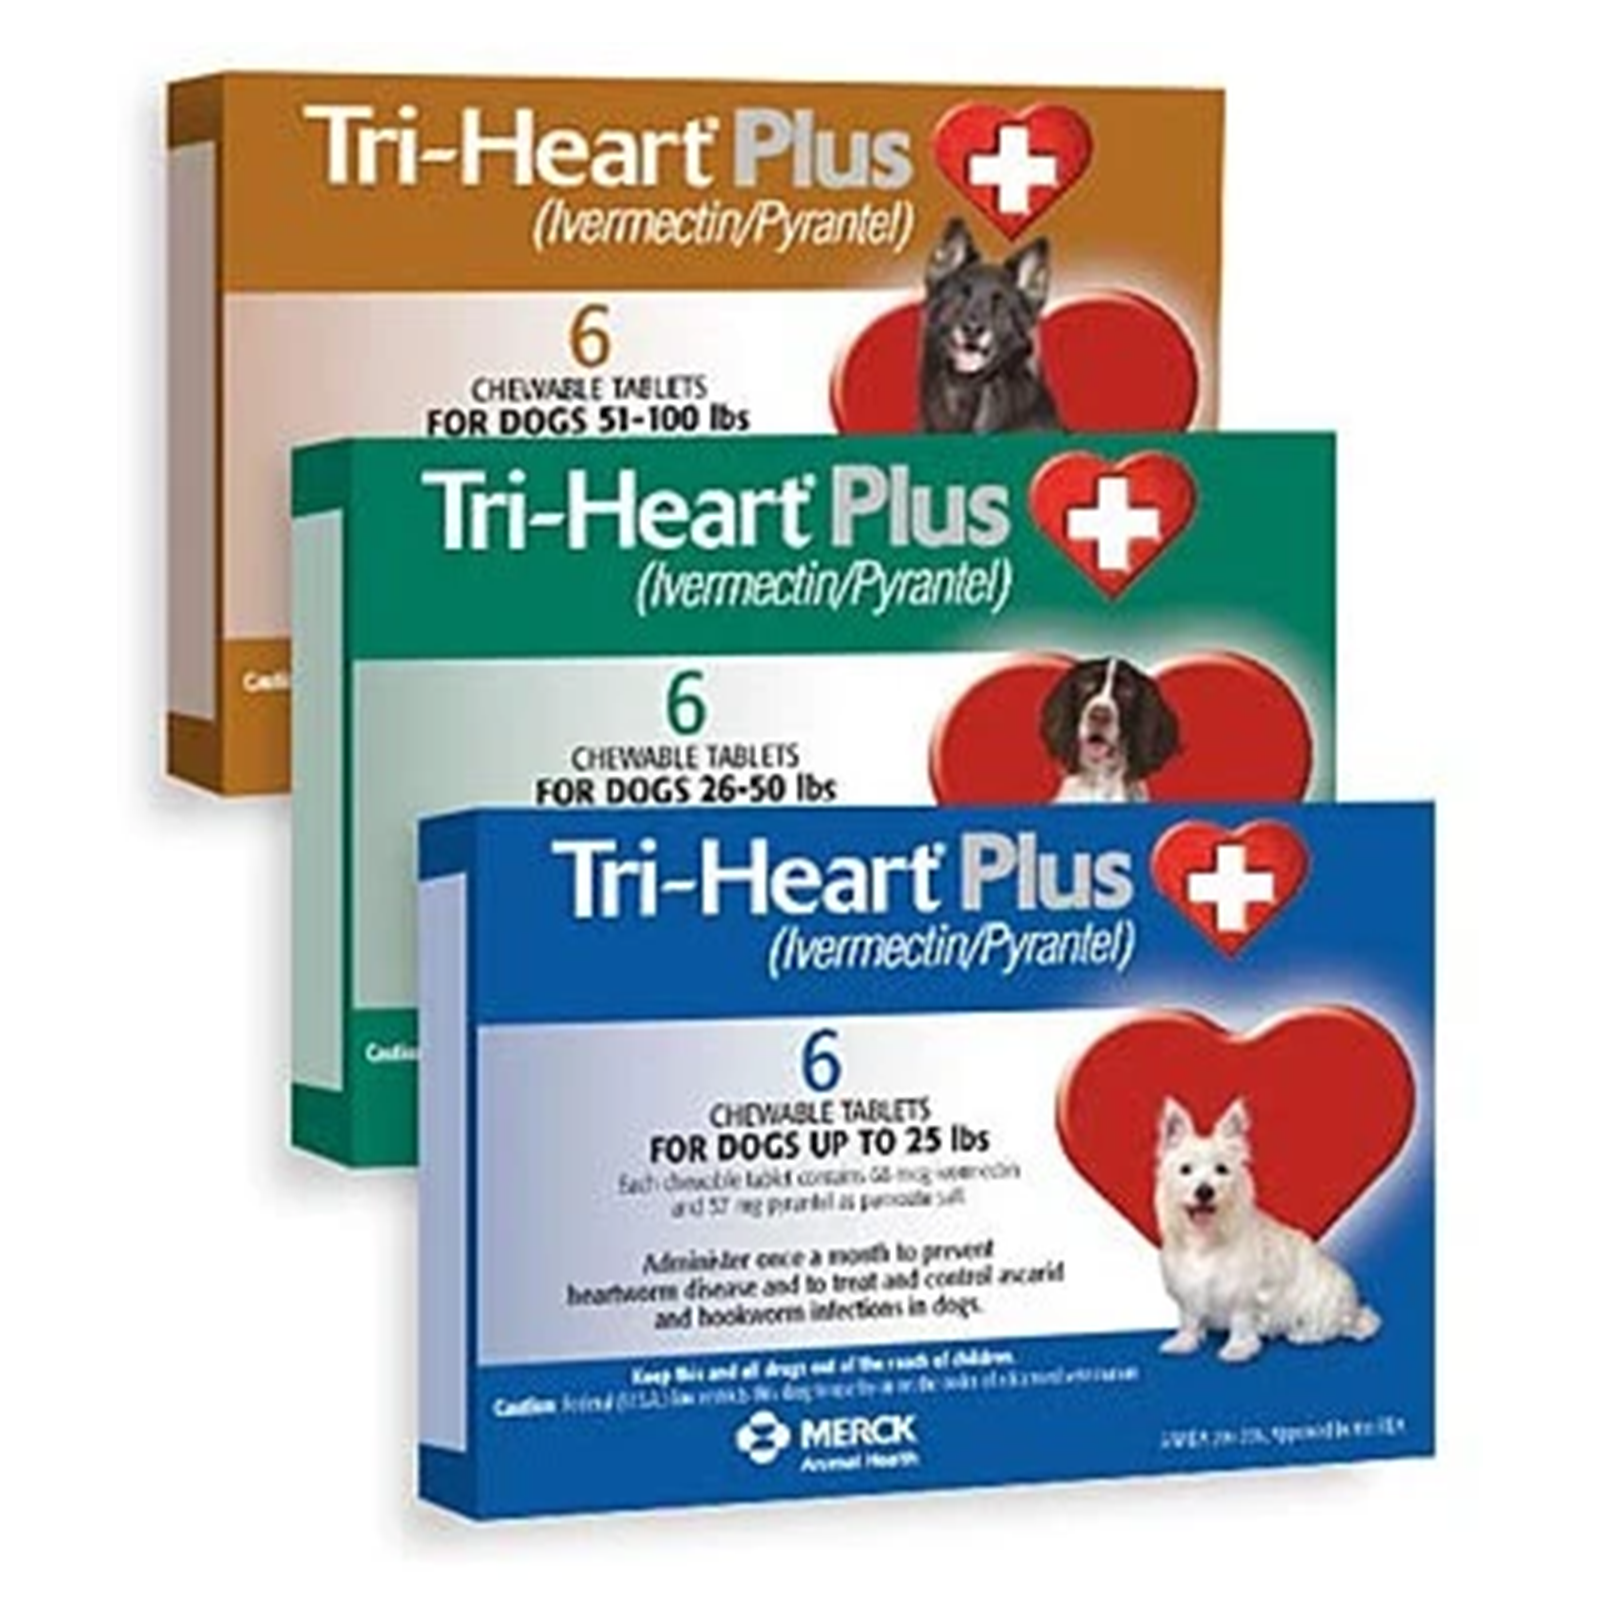 TRI-HEART® PLUS (ivermectin/pyrantel) CHEWABLE TABLETS